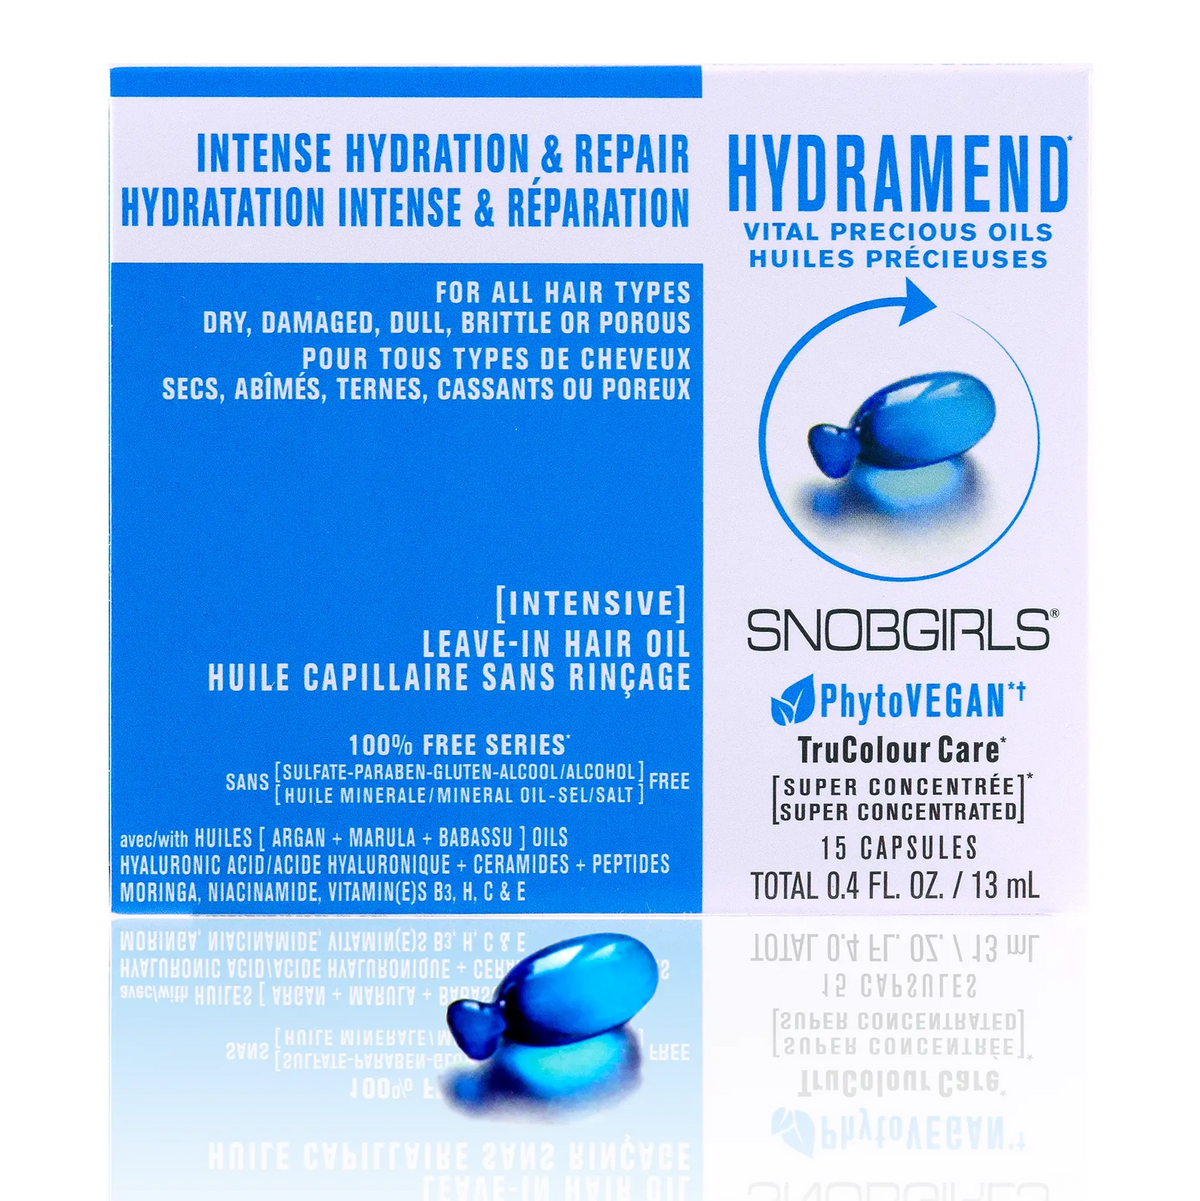 Trio HYDRAMEND Vegan Shampoo, Conditioner, Hair Oil for INTENSE HYDRATTrio HYDRAMEND Vegan Shampoo, Conditioner, Hair OilSNOBGIRLS Canada